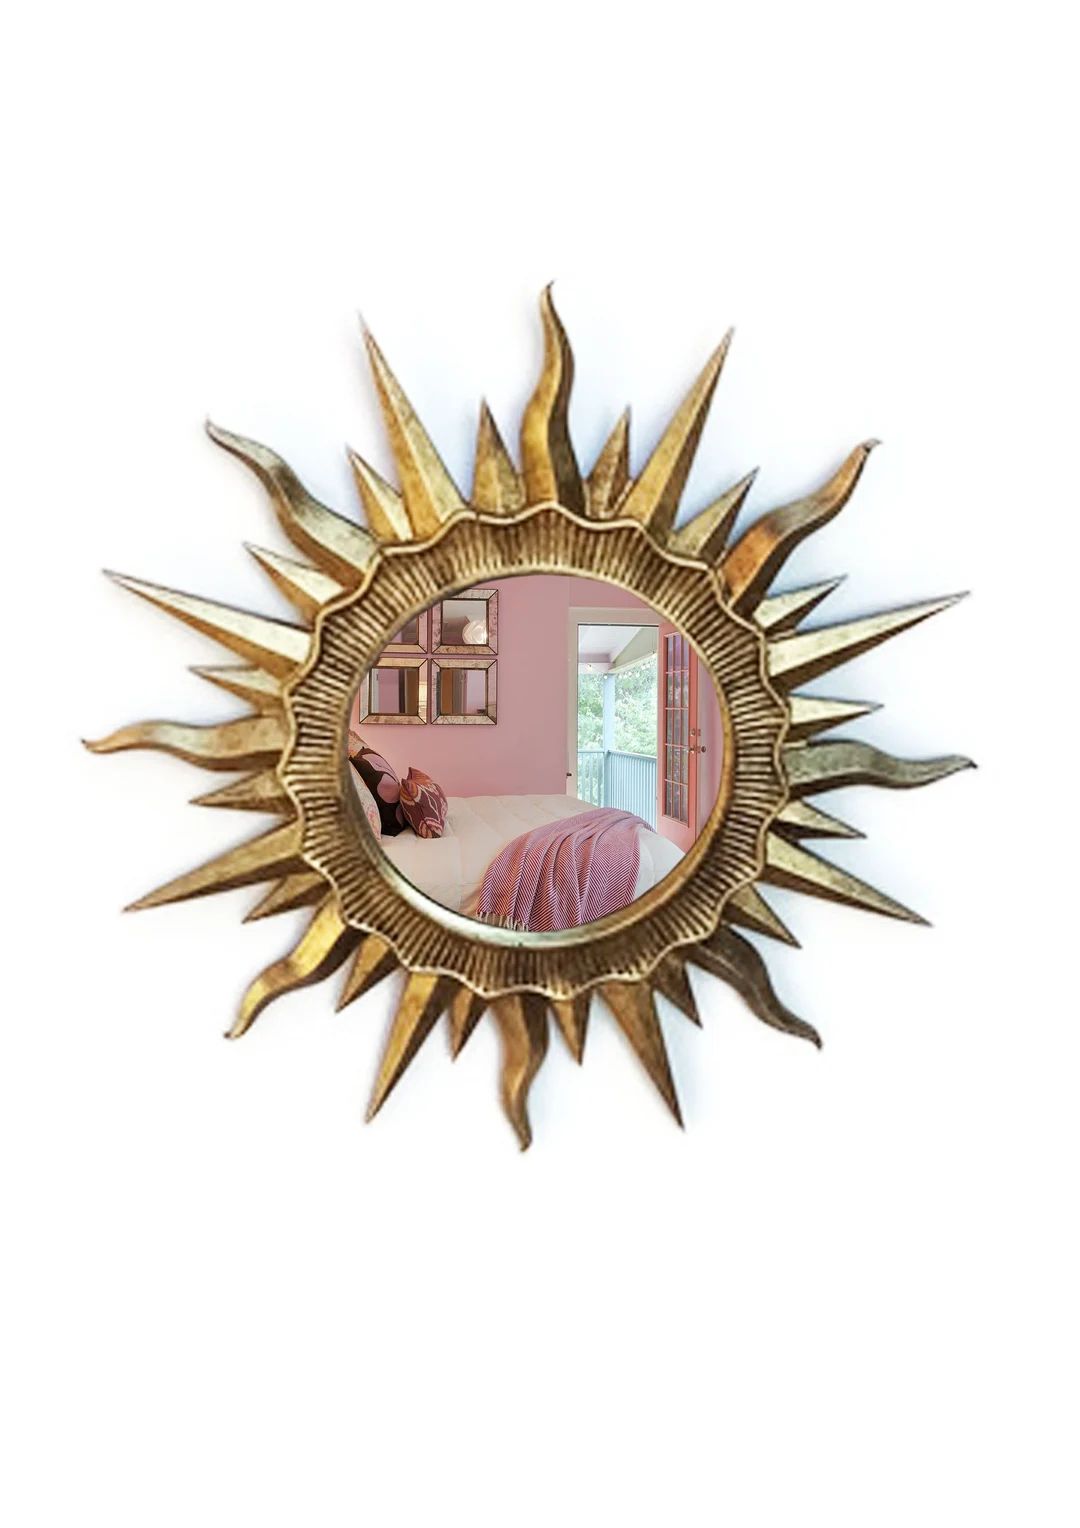 Зеркало Круглое Солнце цвет латуни с патиной смолы И... | Etsy (US)